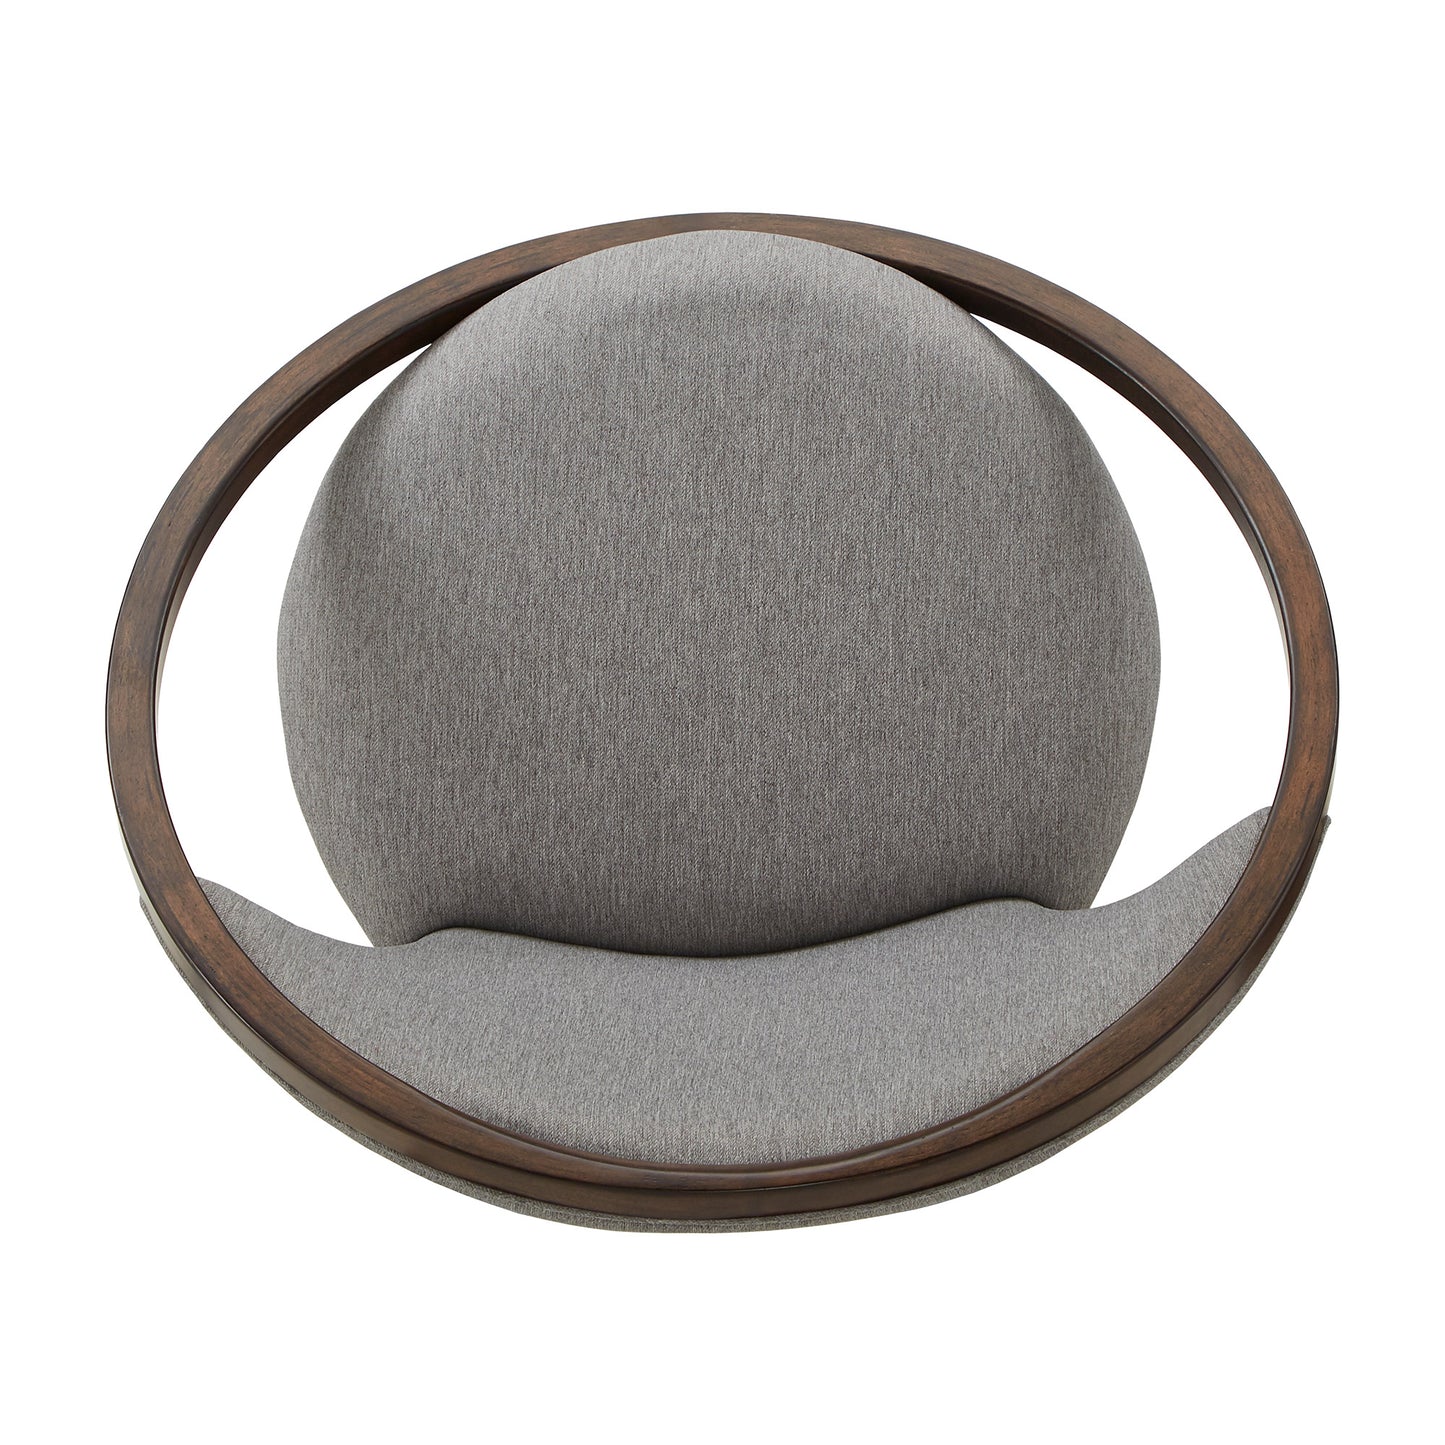 32" Wide Fabric Upholstered Accent Barrel Chair - Walnut Finish, Grey Herringbone Fabric